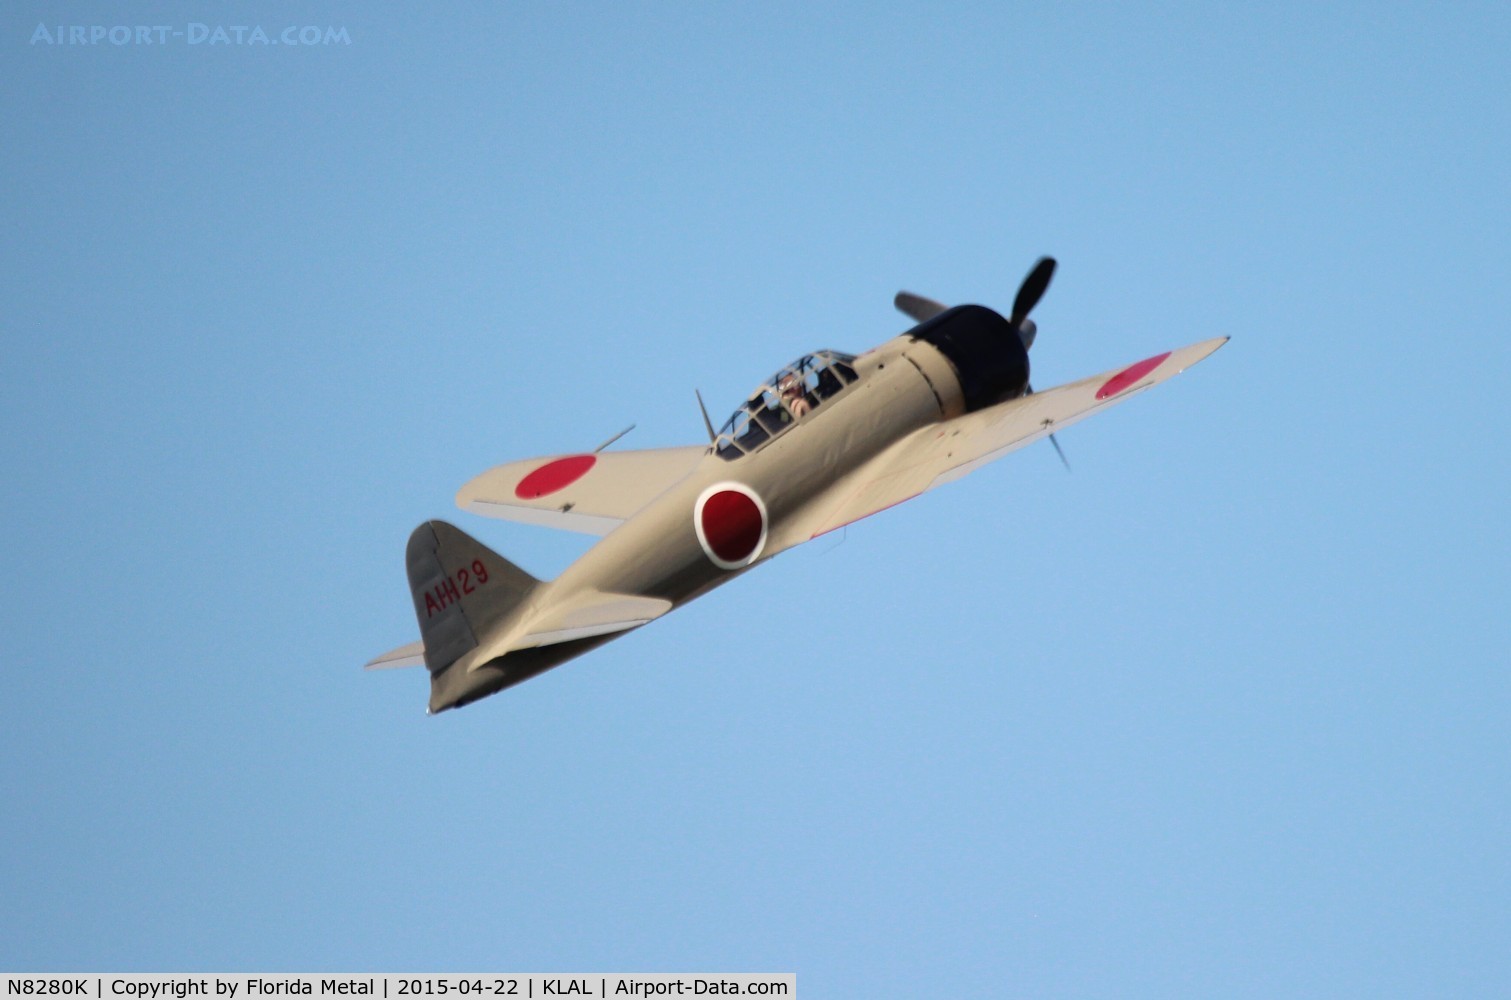 N8280K, 1941 Nakajima A6M2 Model 21 C/N 1498, SNF LAL 2015